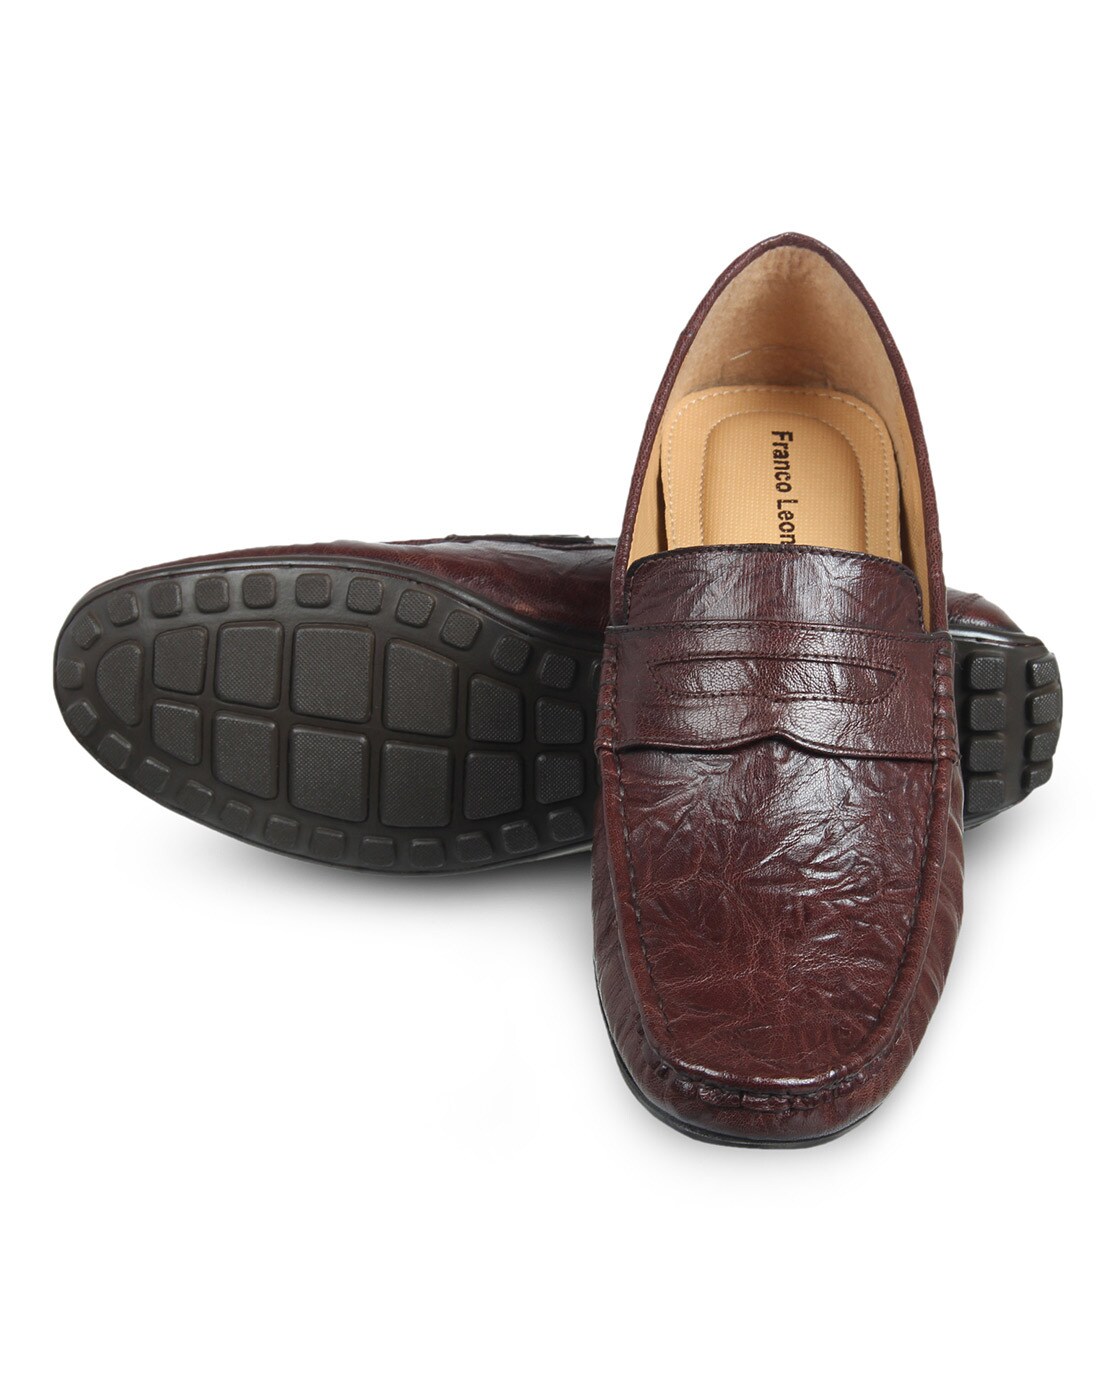 franco leone leather shoes